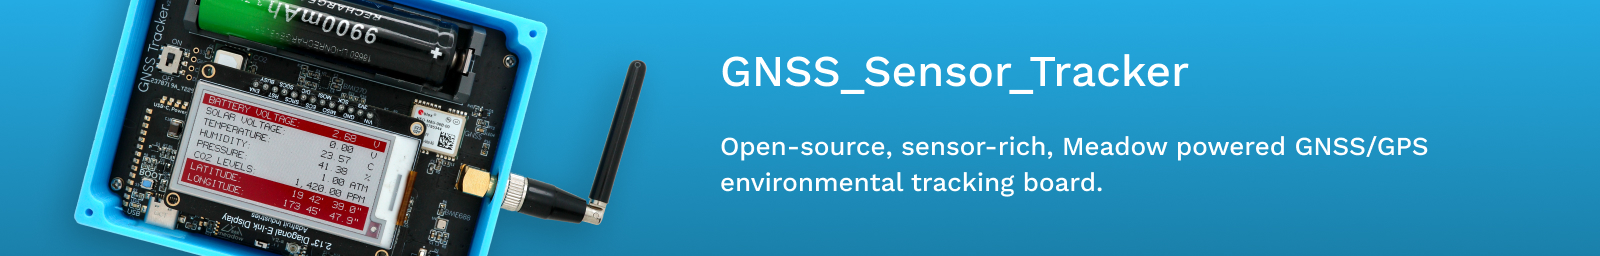 Gnss Sensor Tracker